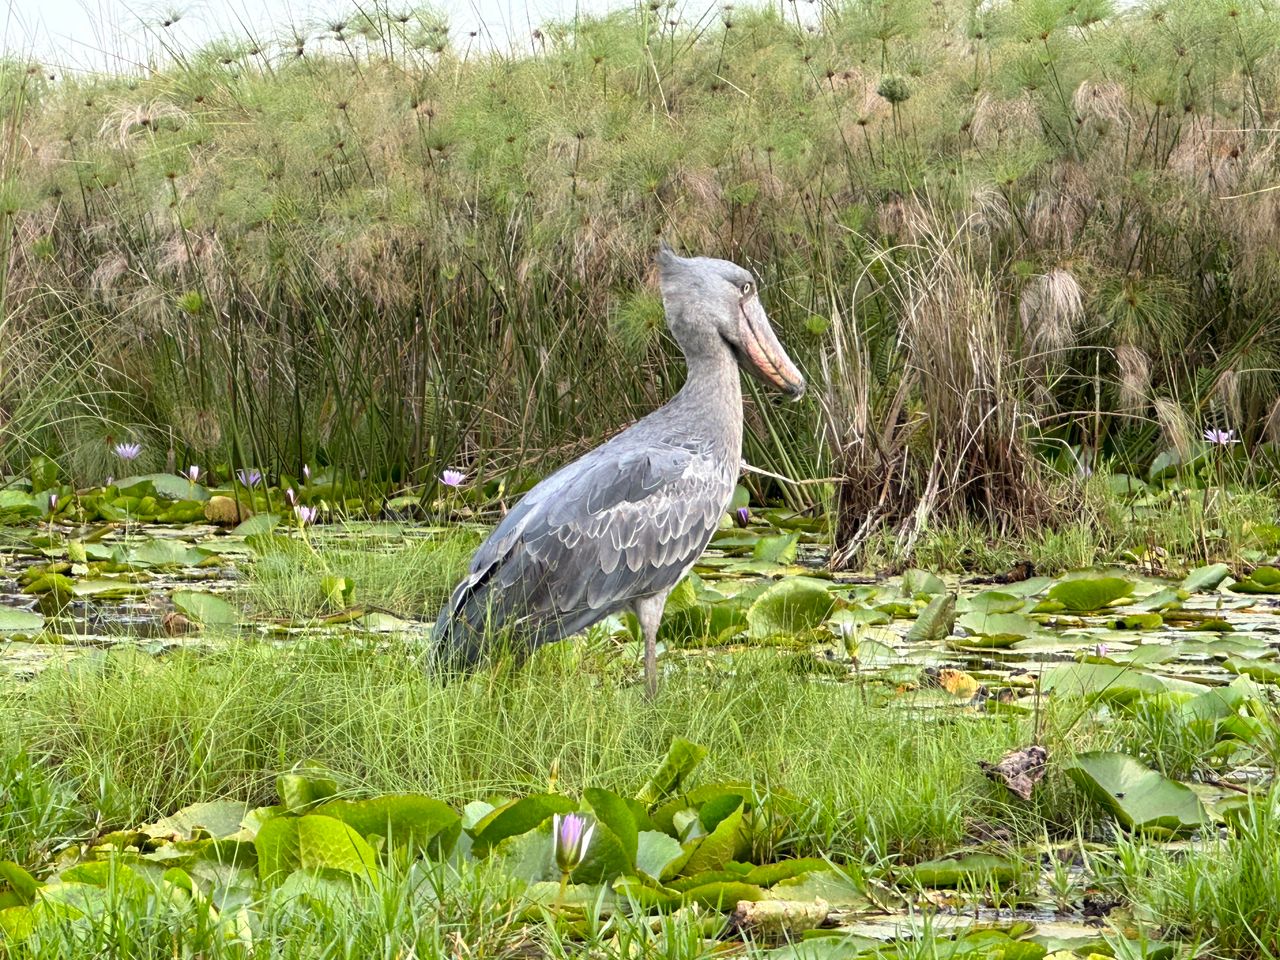 2Day Mabamba swamp bird watching and shoebill stork tour